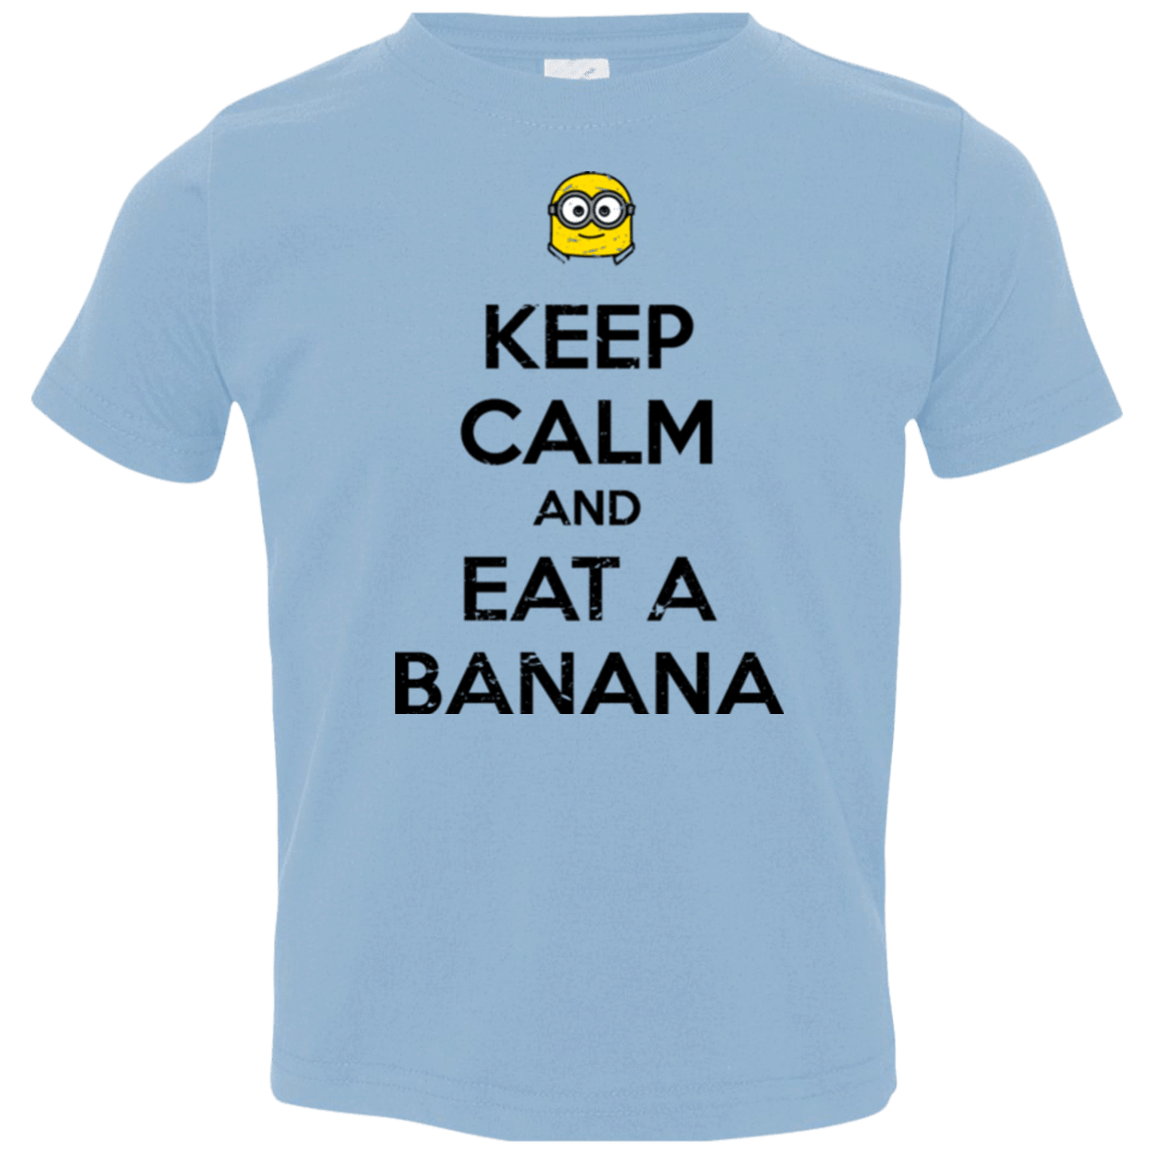 T-Shirts Light Blue / 2T Keep Calm Banana Toddler Premium T-Shirt